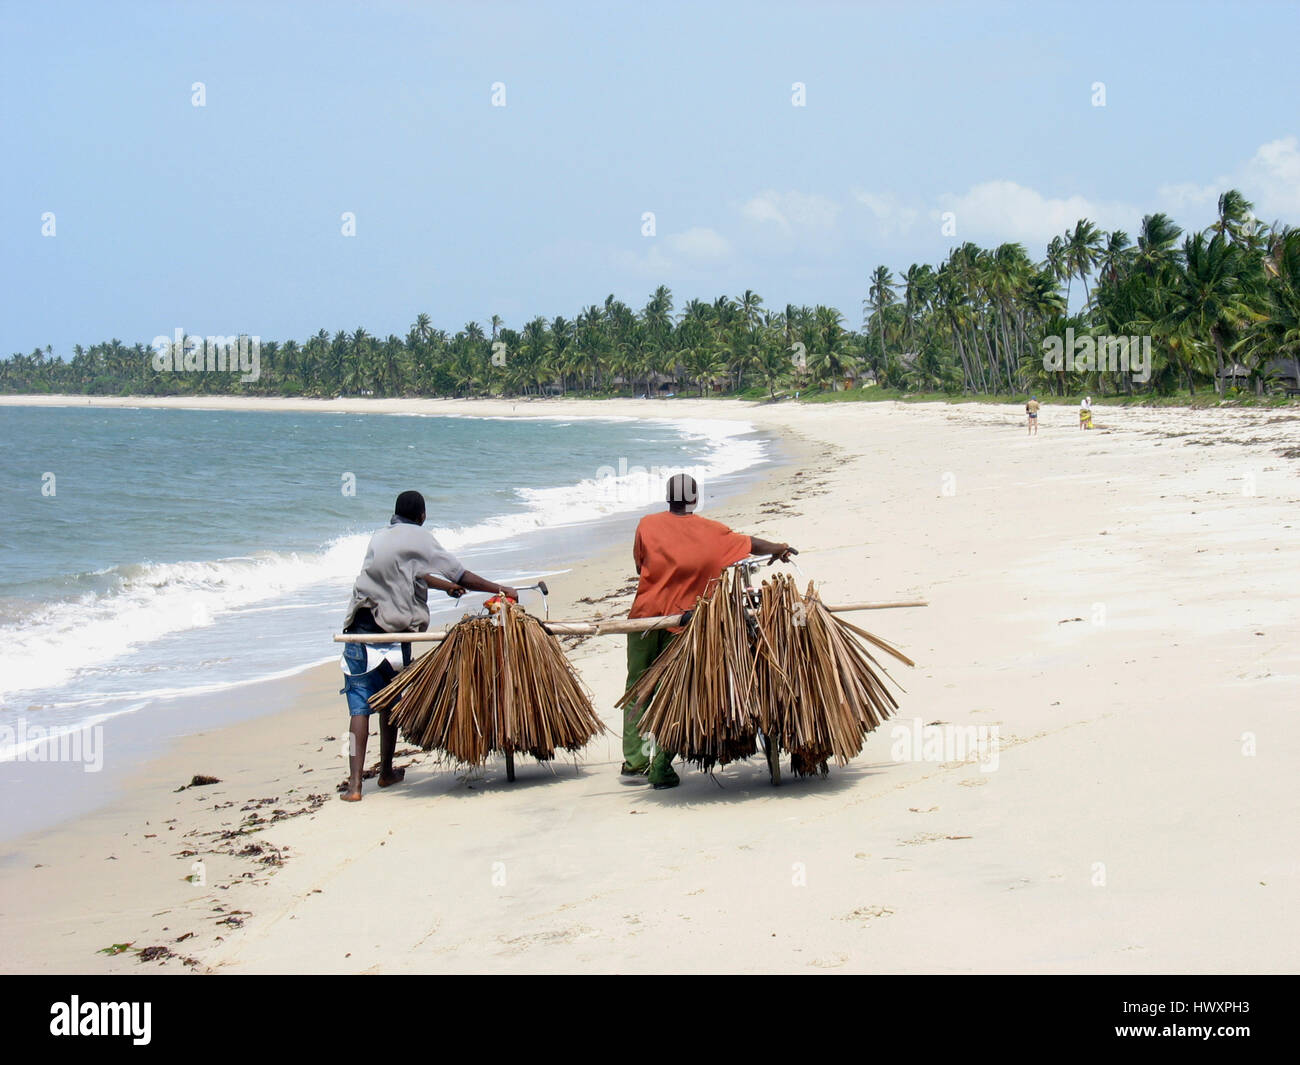 Two men pushing their bicycles loaded with palm leaves along the beach, Pangani, Tanga region, Tanzania Stock Photo